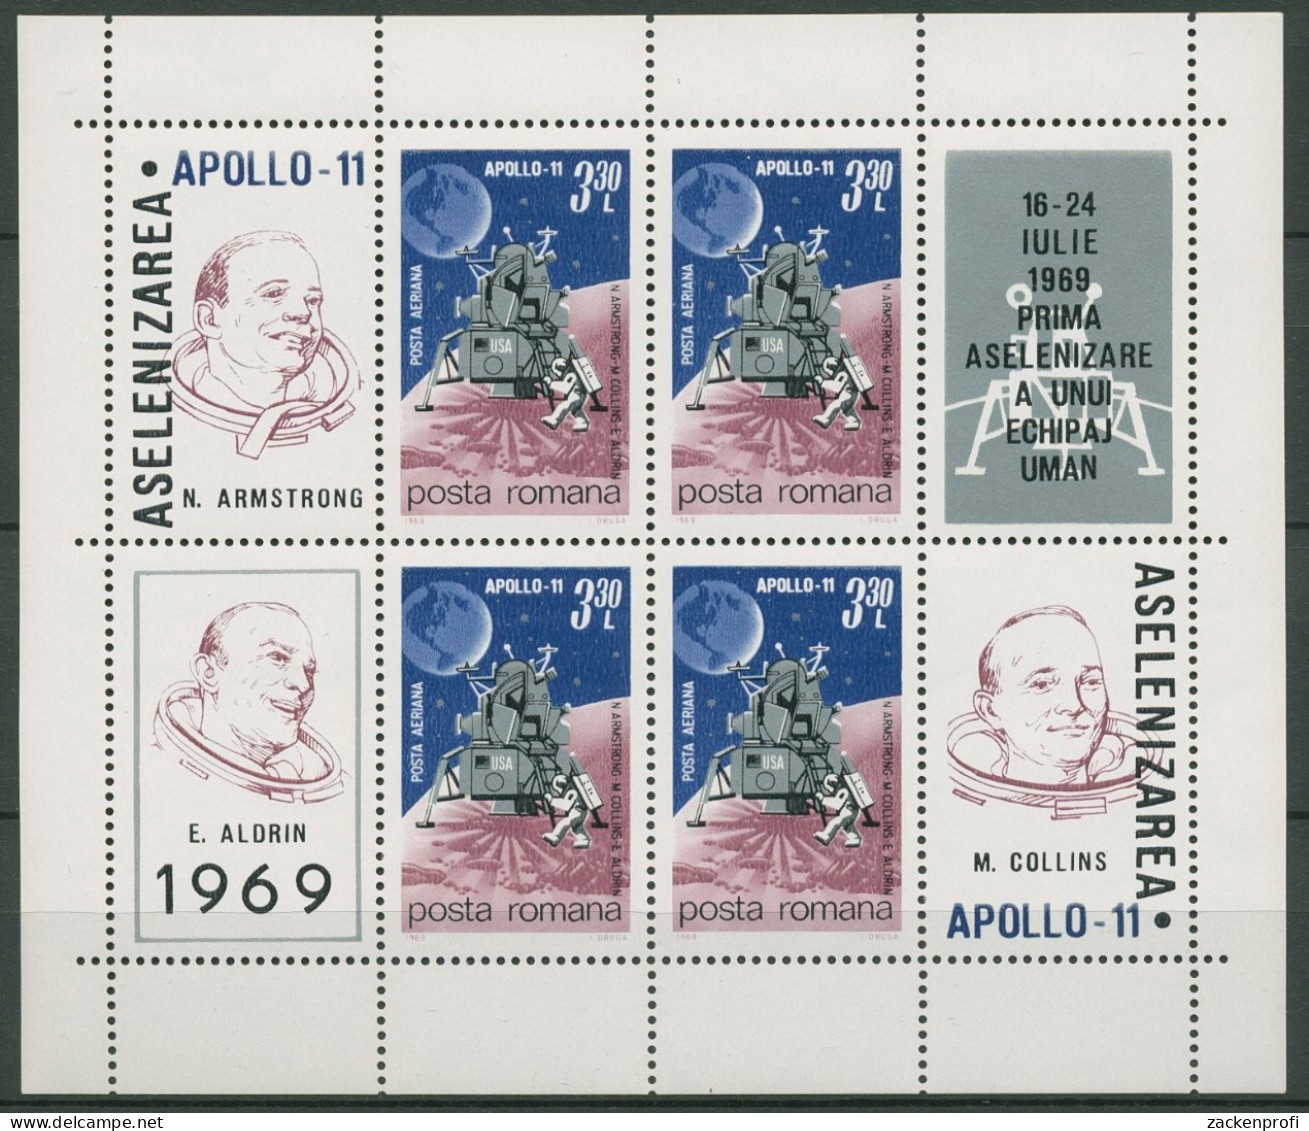 Rumänien 1969 Apollo11 Mondlandung Block 72 Postfrisch (C92120) - Blocks & Sheetlets